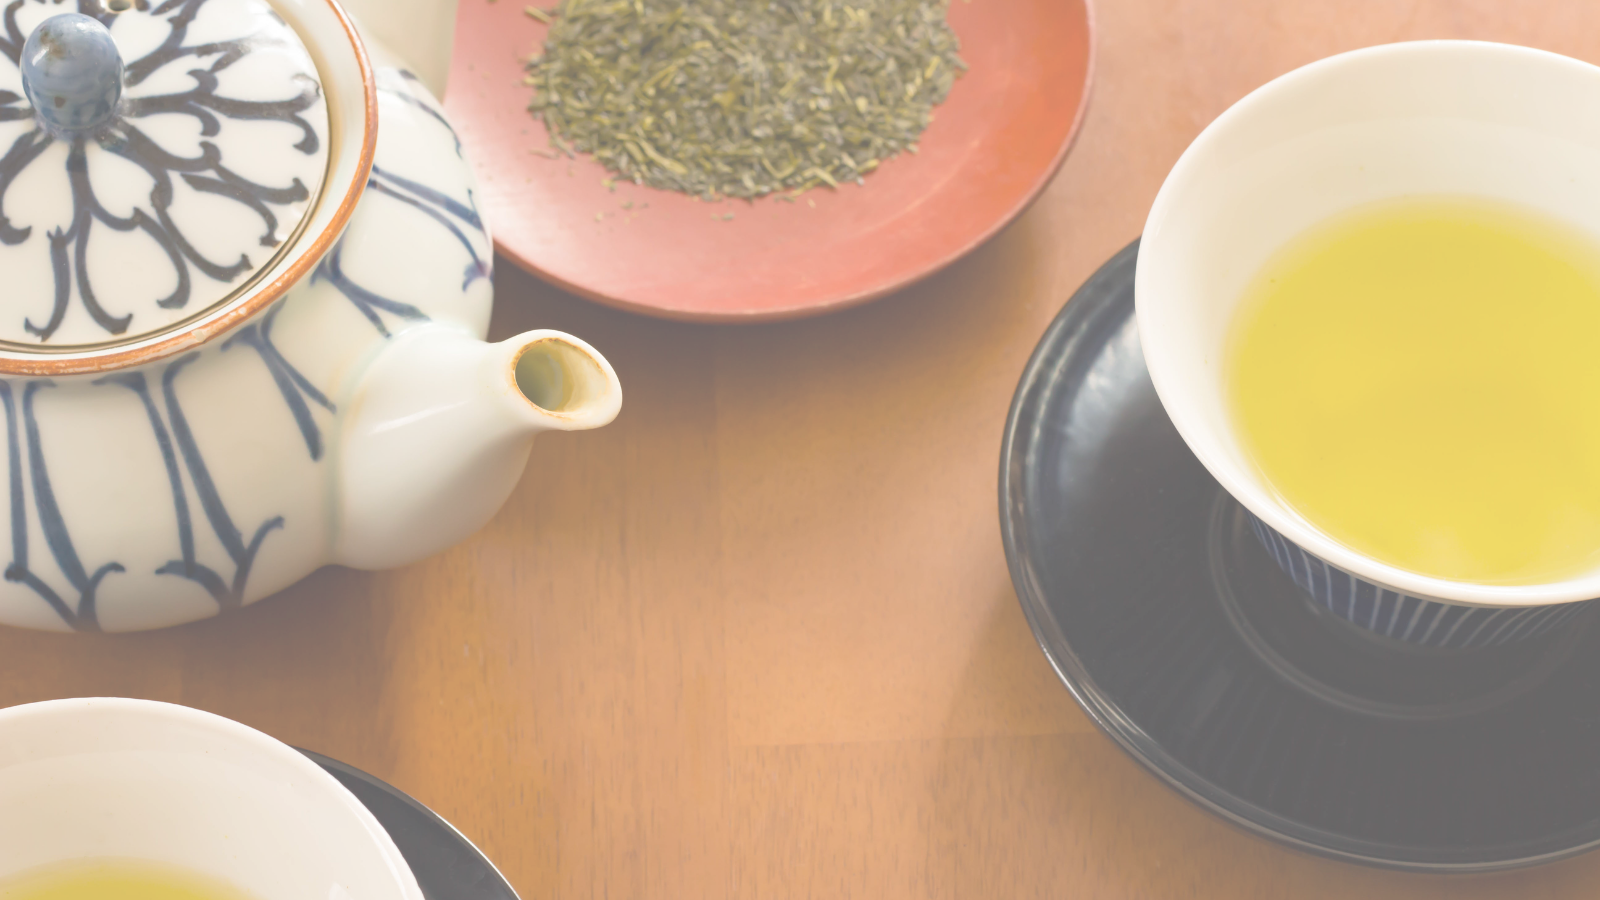 Do You Want Real Tea Or Herbal Tea?